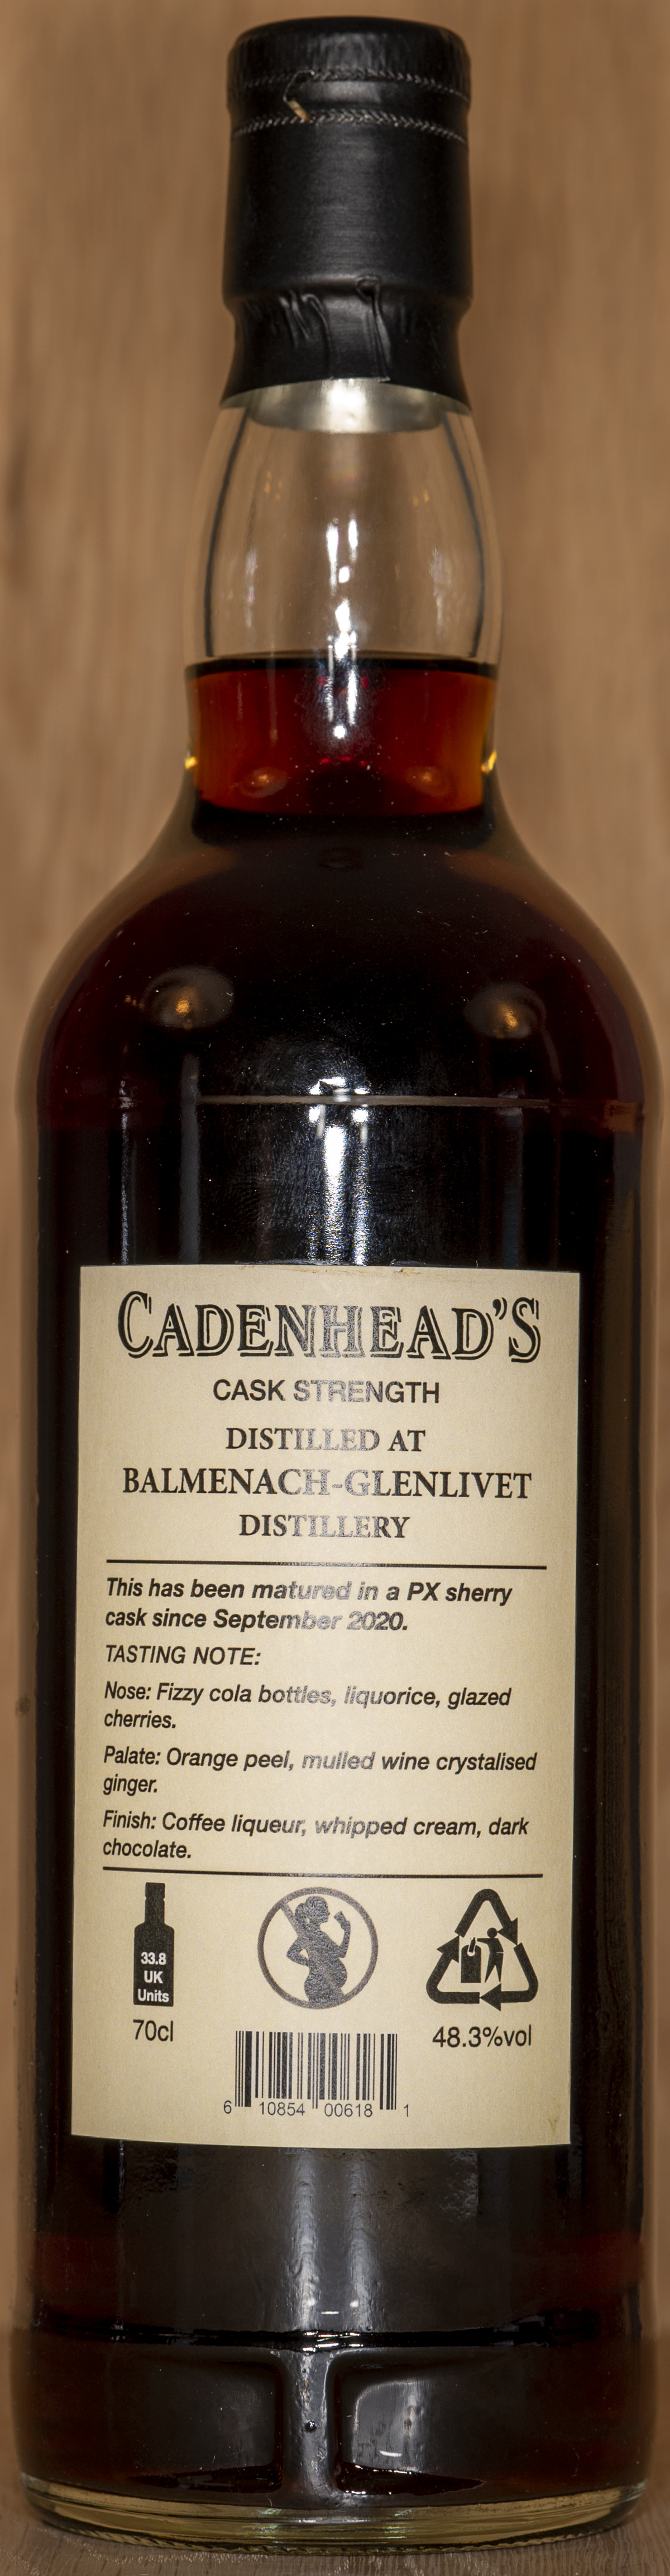 Billede: DSC_5017 - Cadenheads Sherry Cask Balmenach 17 - bottle back.jpg